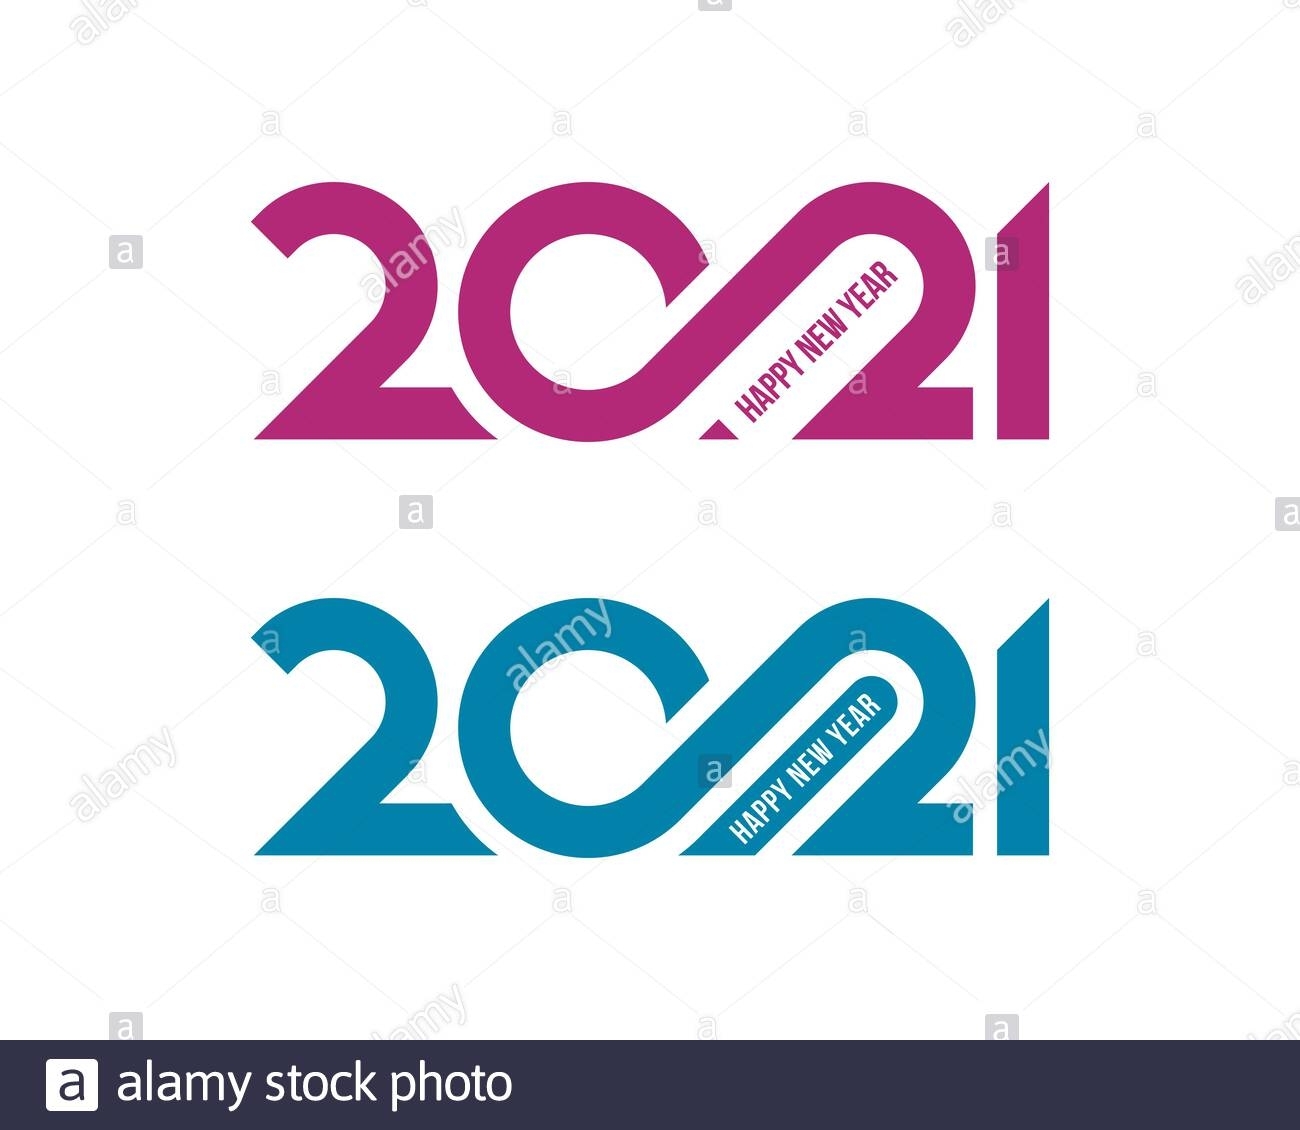 Take 2021/2221 Financial Printable Clender